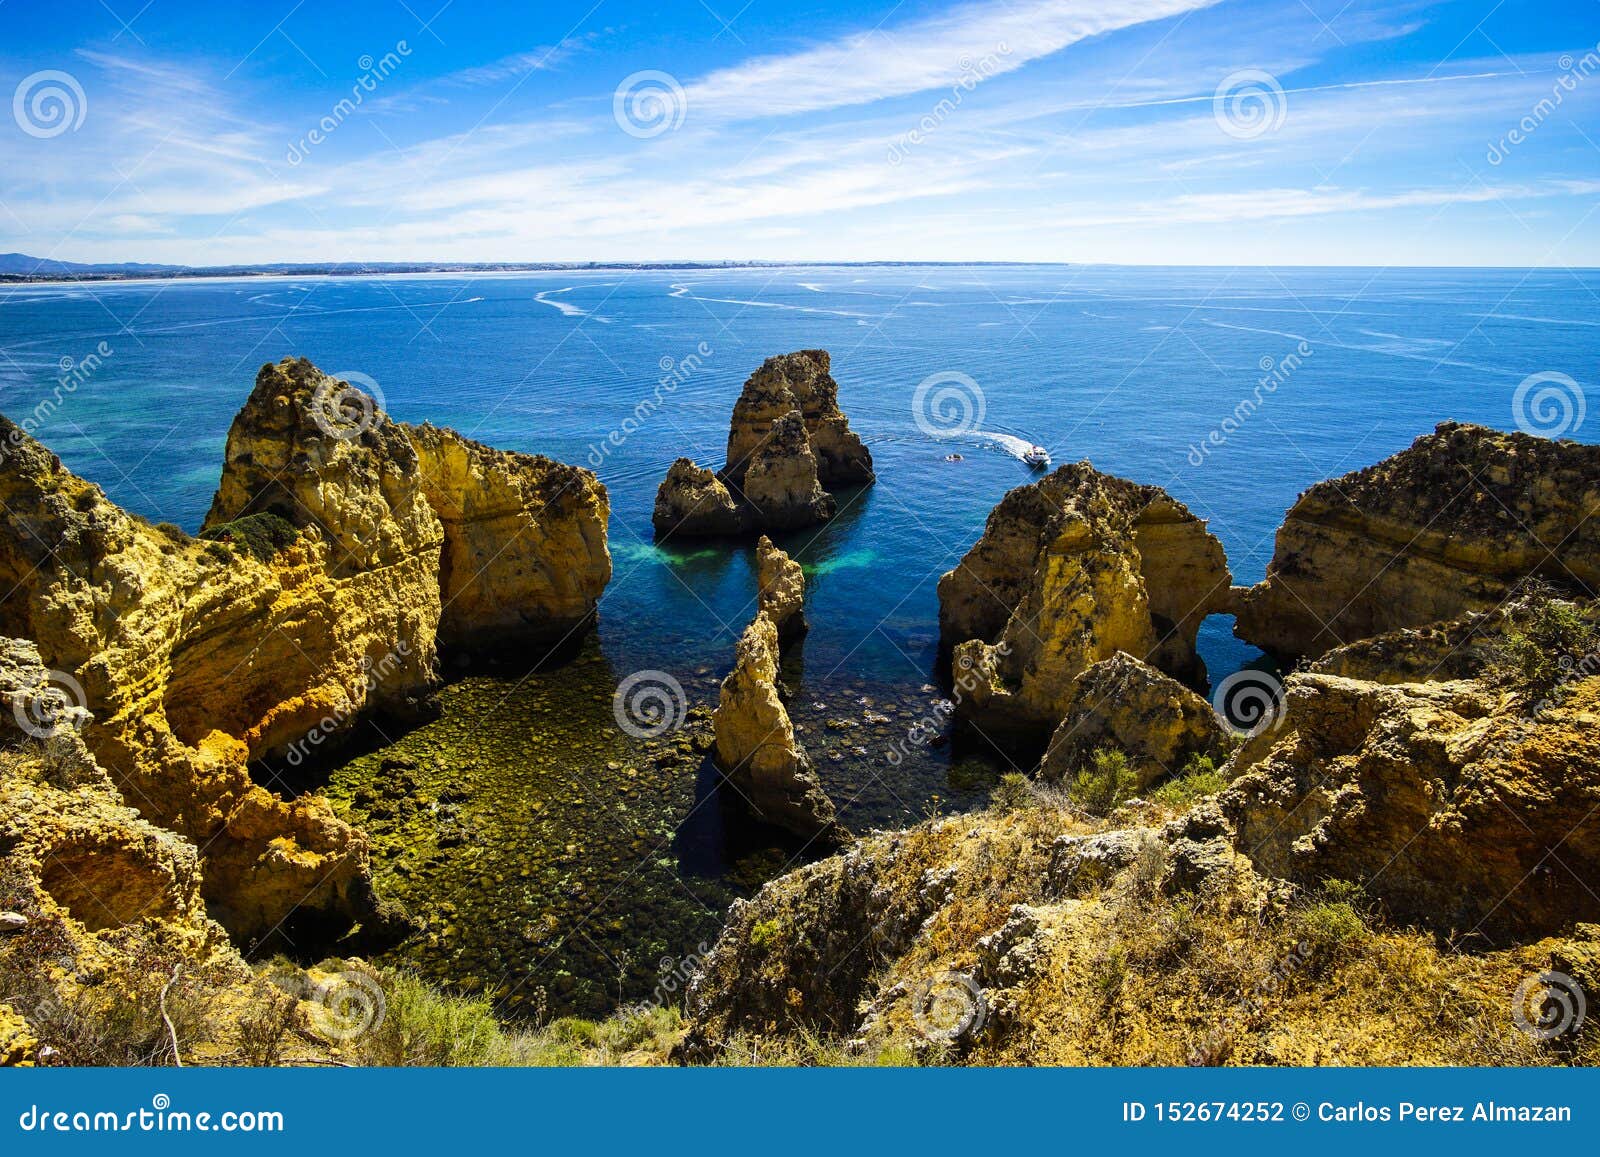 formaciÃÂ³n de rocas en las costas de lagos, algarve portugal. rock formation on the shores of lagos, algarve portugal.